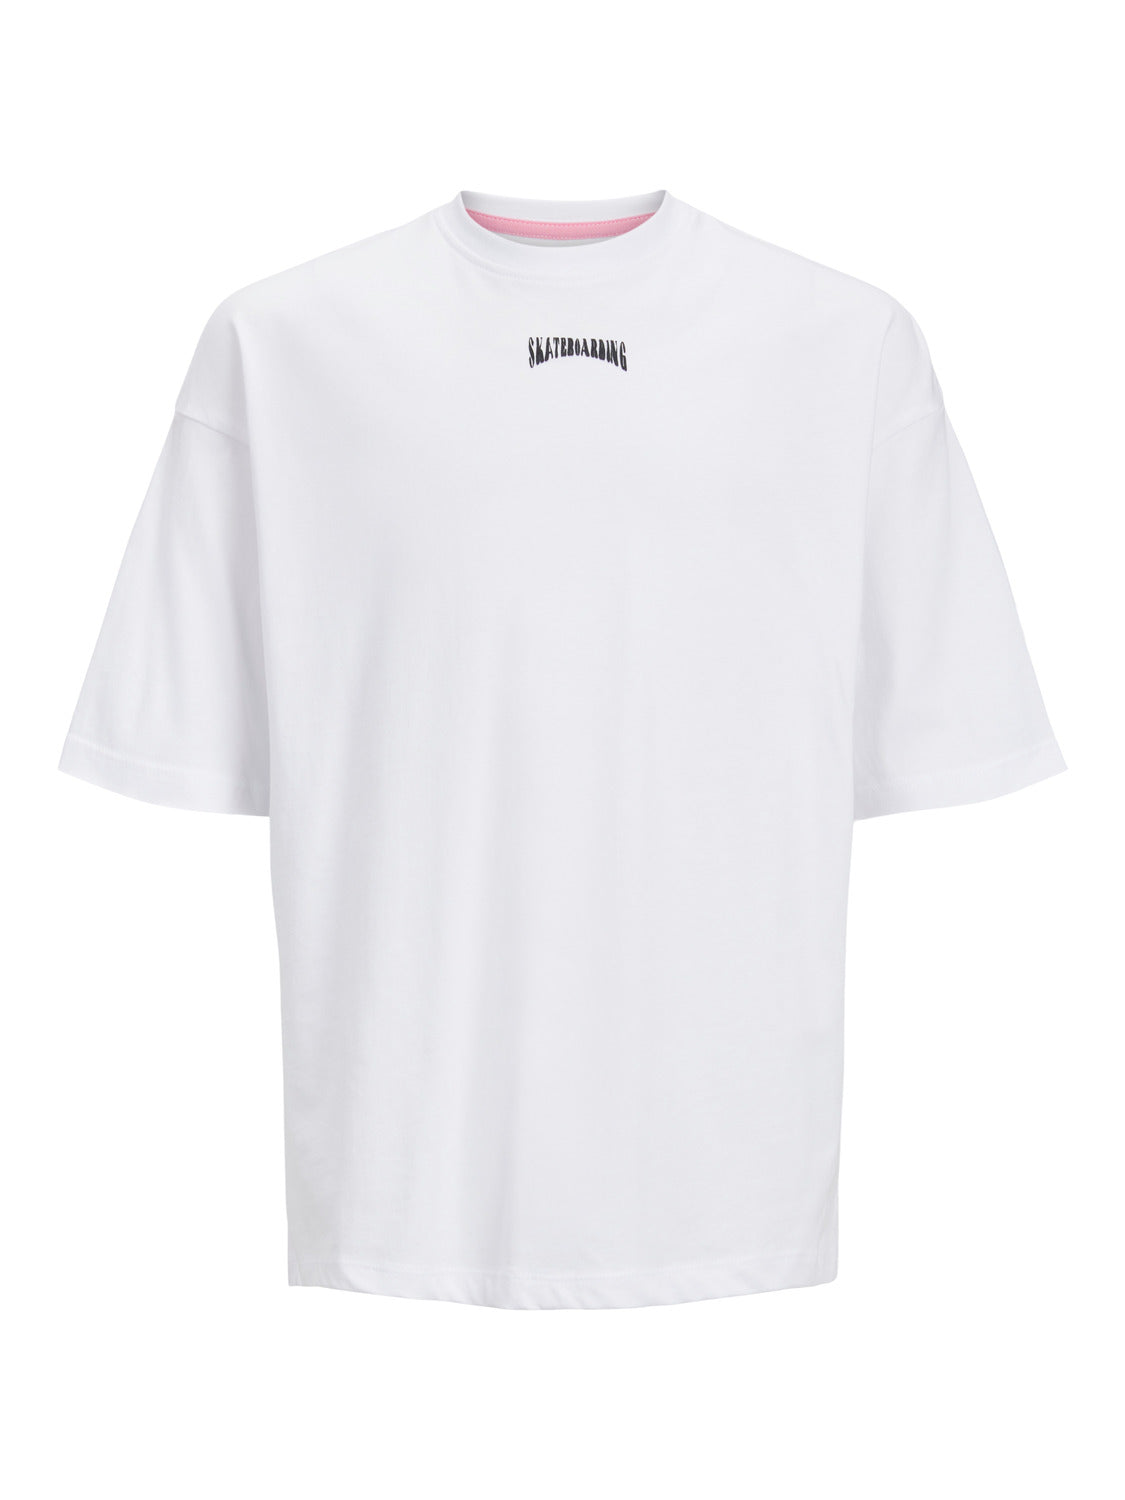 JOROLI T-Shirt - White